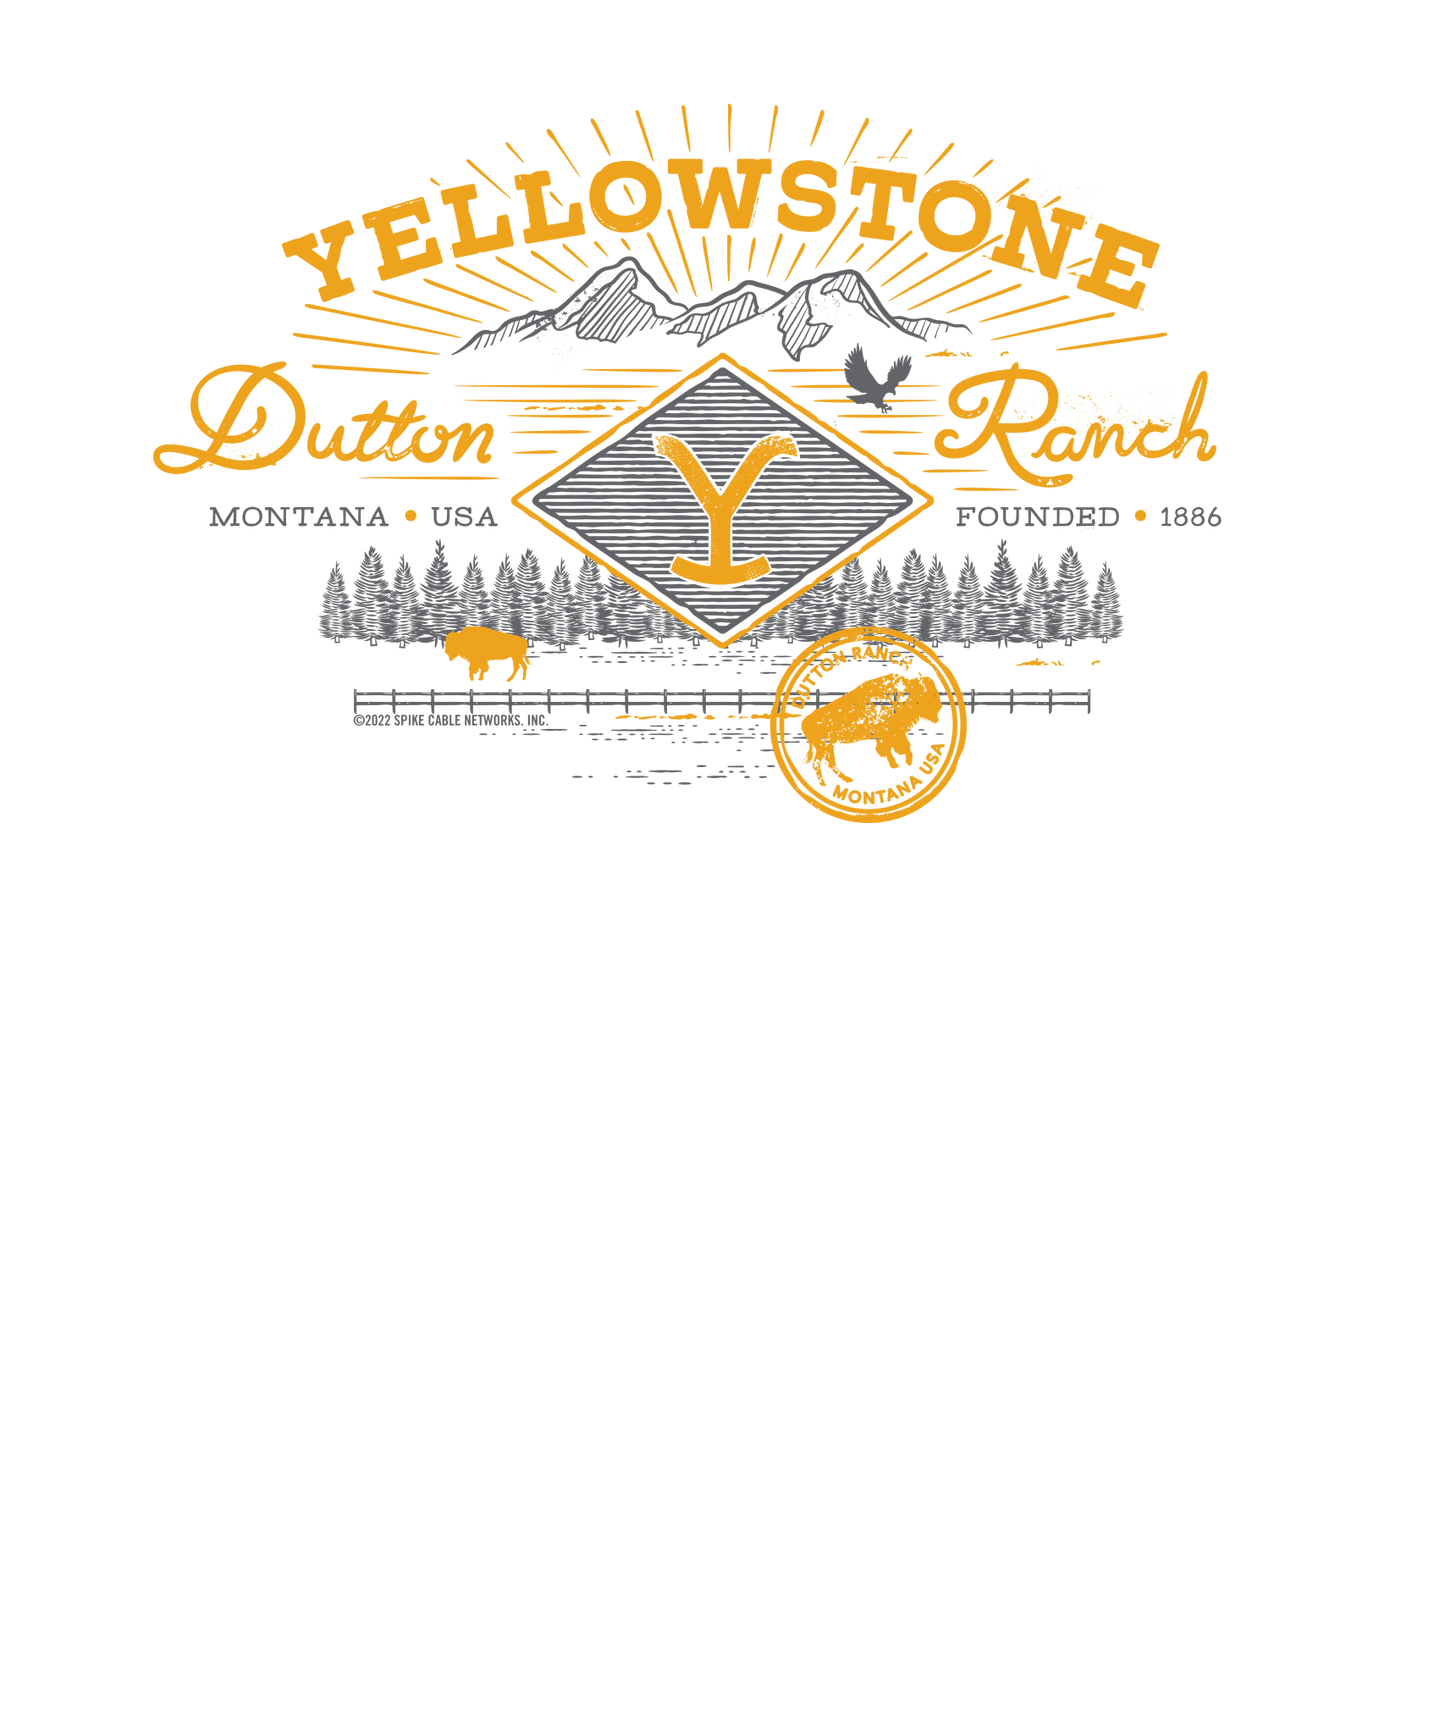 Yellowstone Dutton Ranch Scenery Back Print Short Sleeve T - Shirt - Paramount Shop